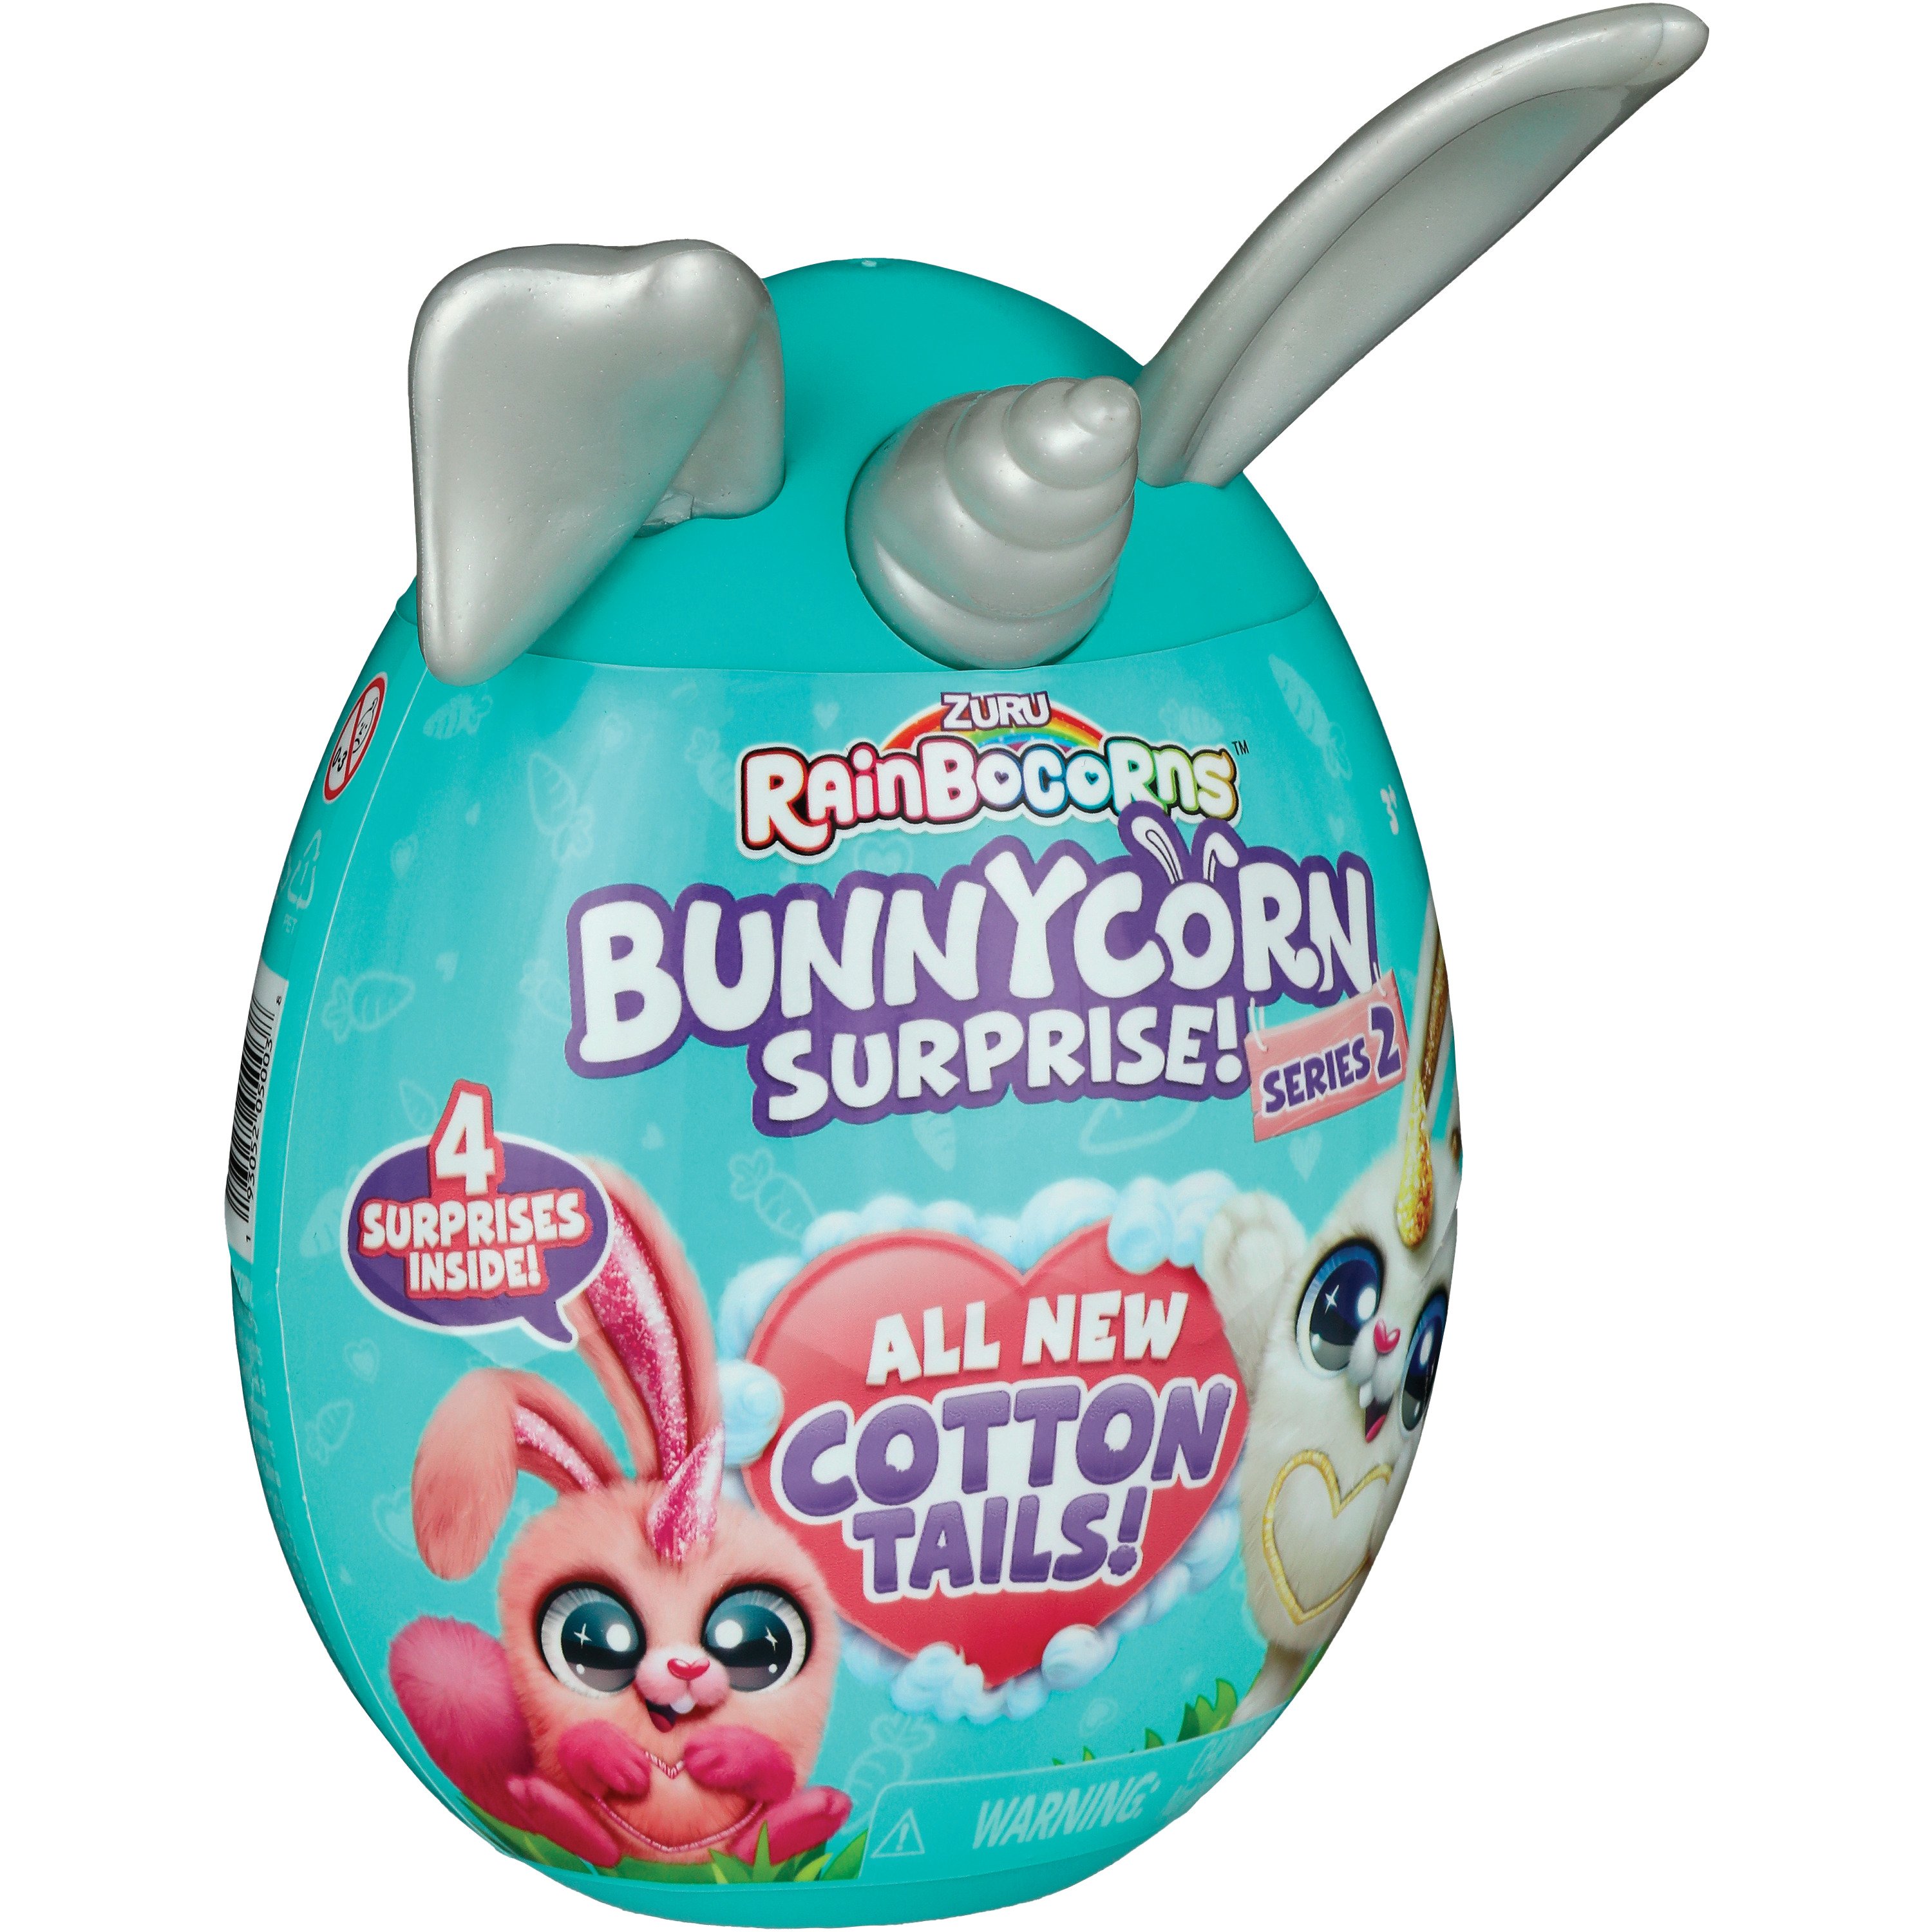 Zuru Rainbocorns Bunnycorn Surprise! Egg - Series 2 - Shop Plush